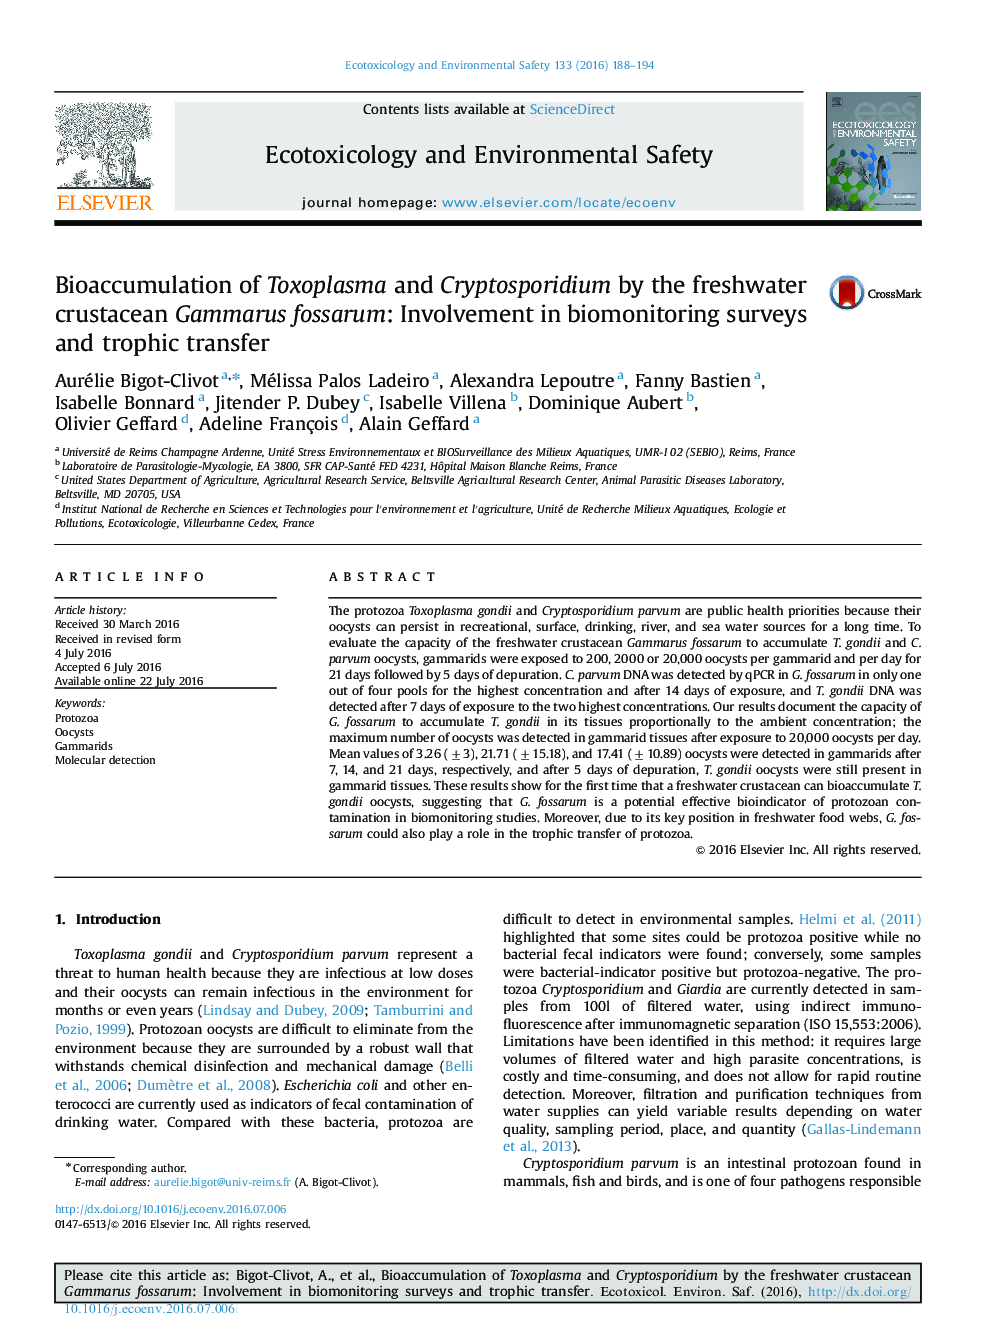 Bioaccumulation of Toxoplasma and Cryptosporidium by the freshwater crustacean Gammarus fossarum: Involvement in biomonitoring surveys and trophic transfer